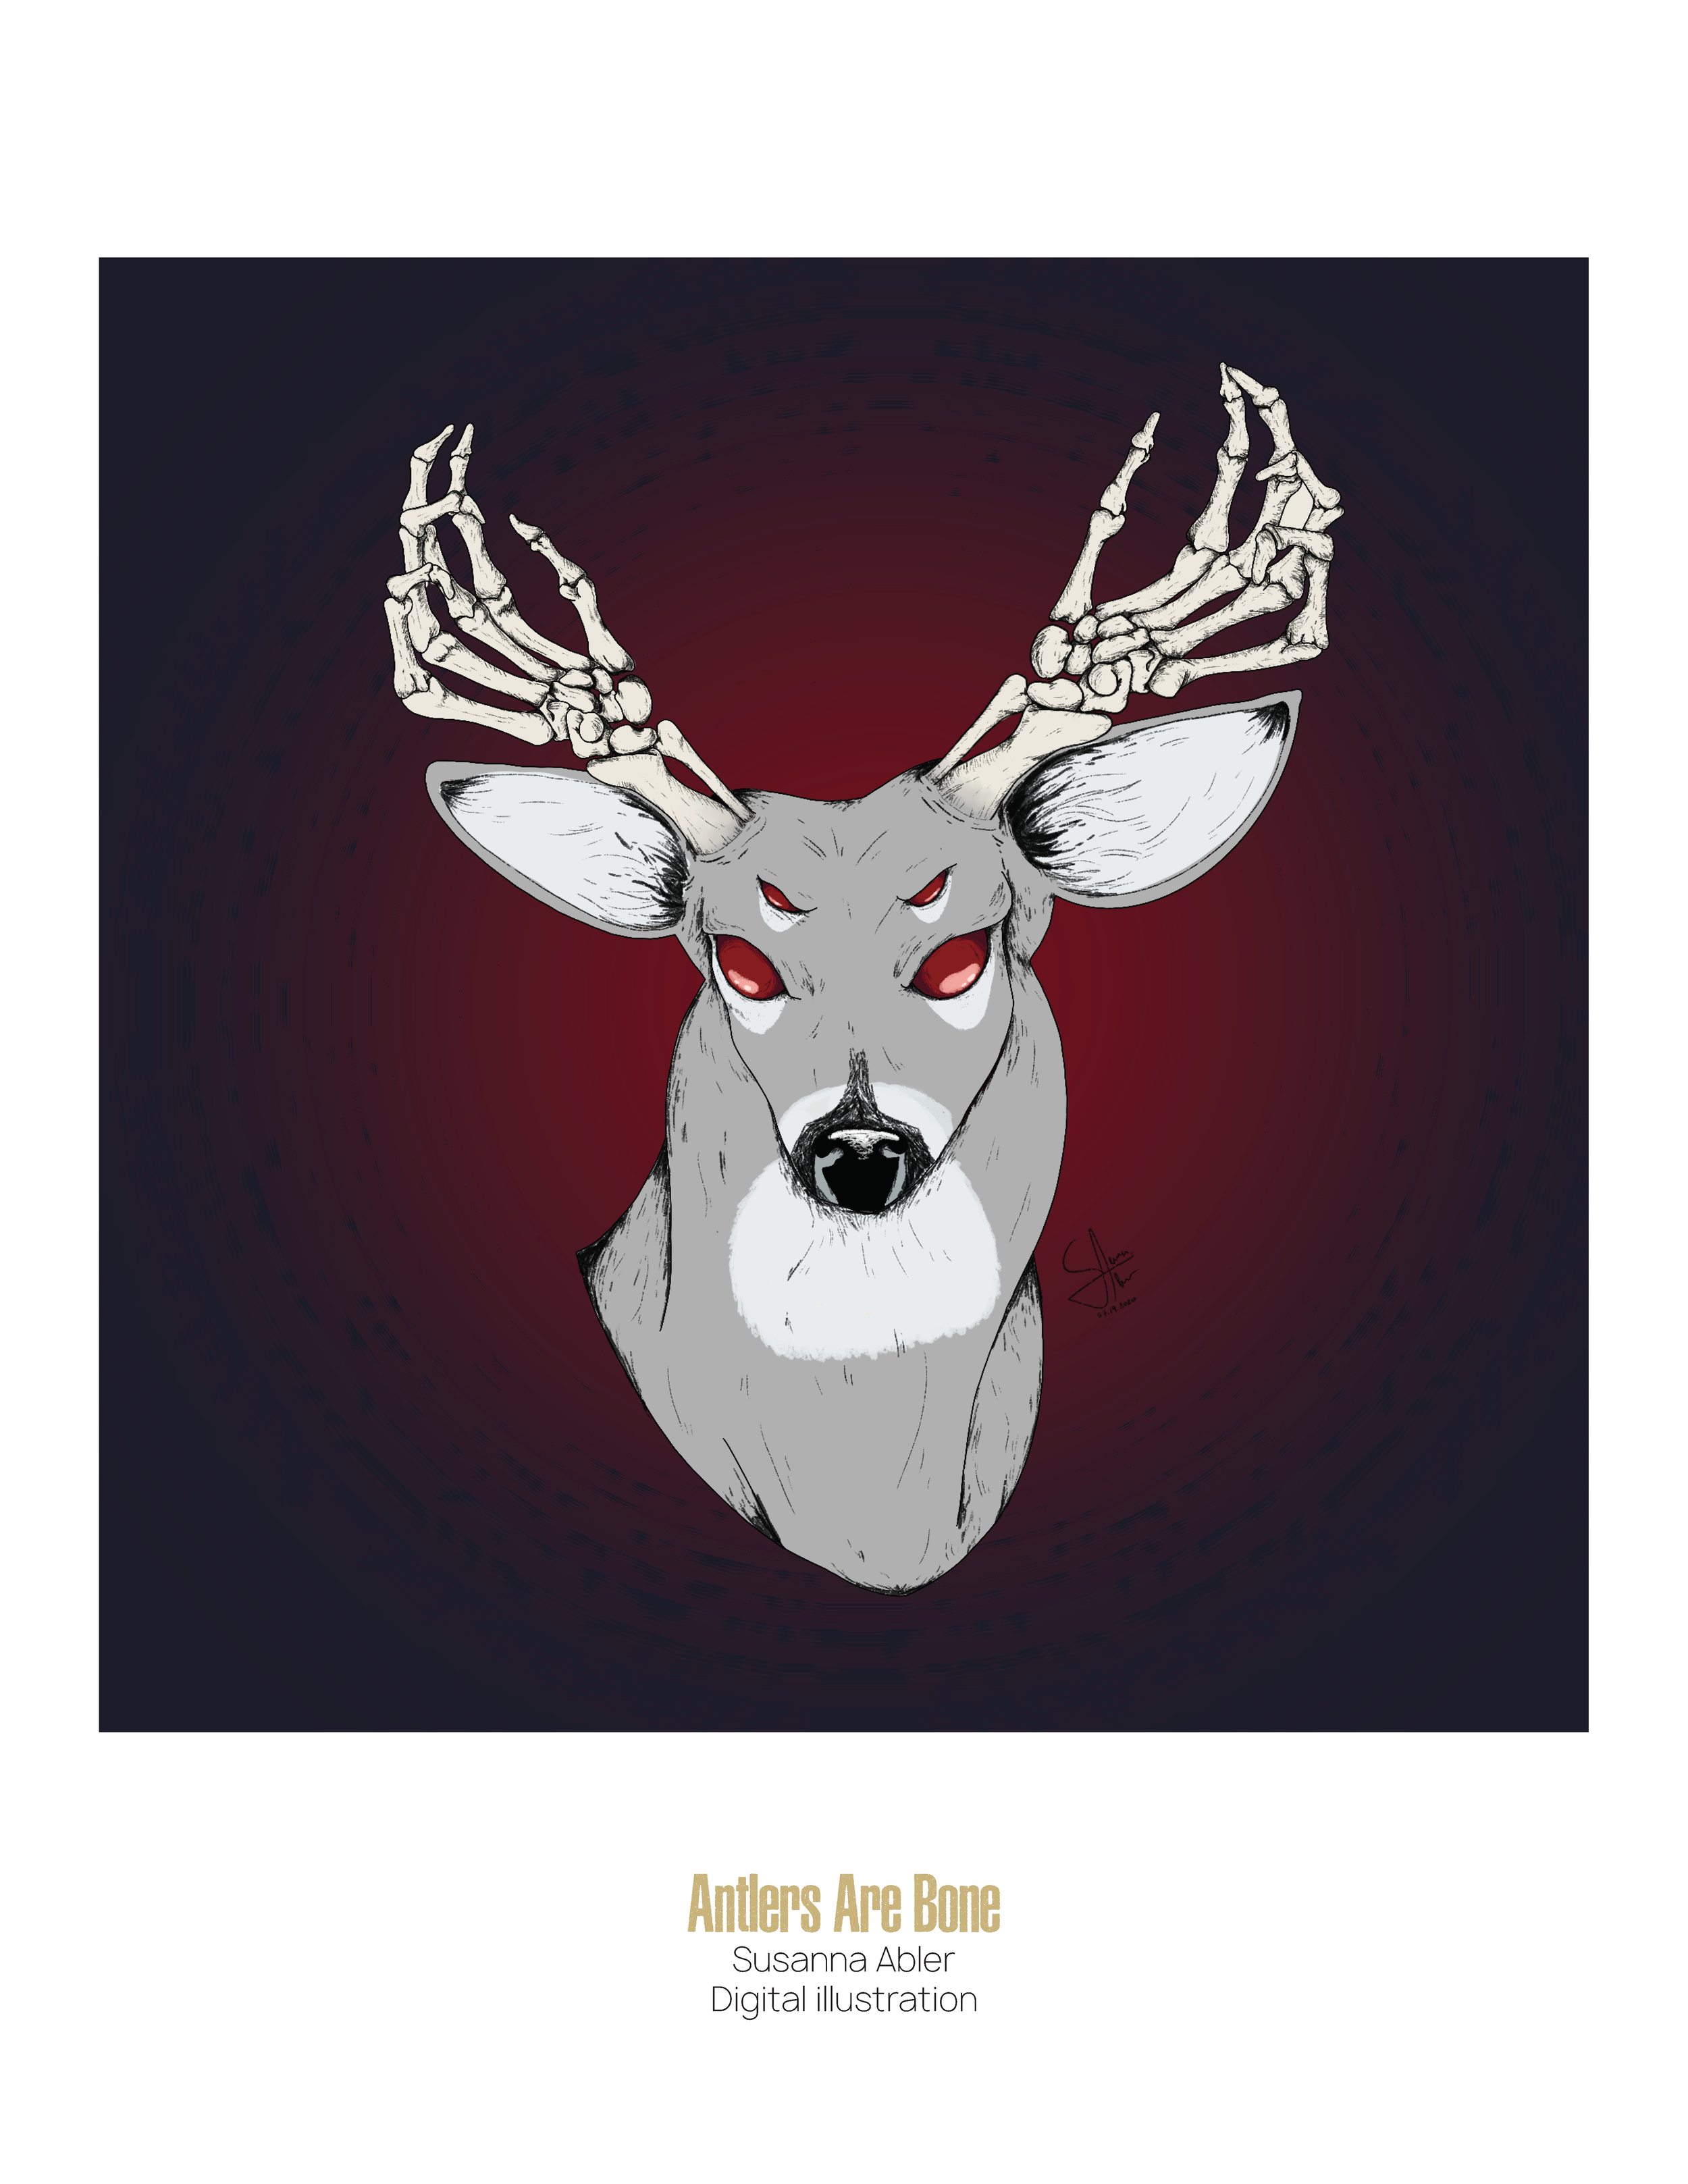 Antlers Are Bone by Susanna Abler, Digital Illustration